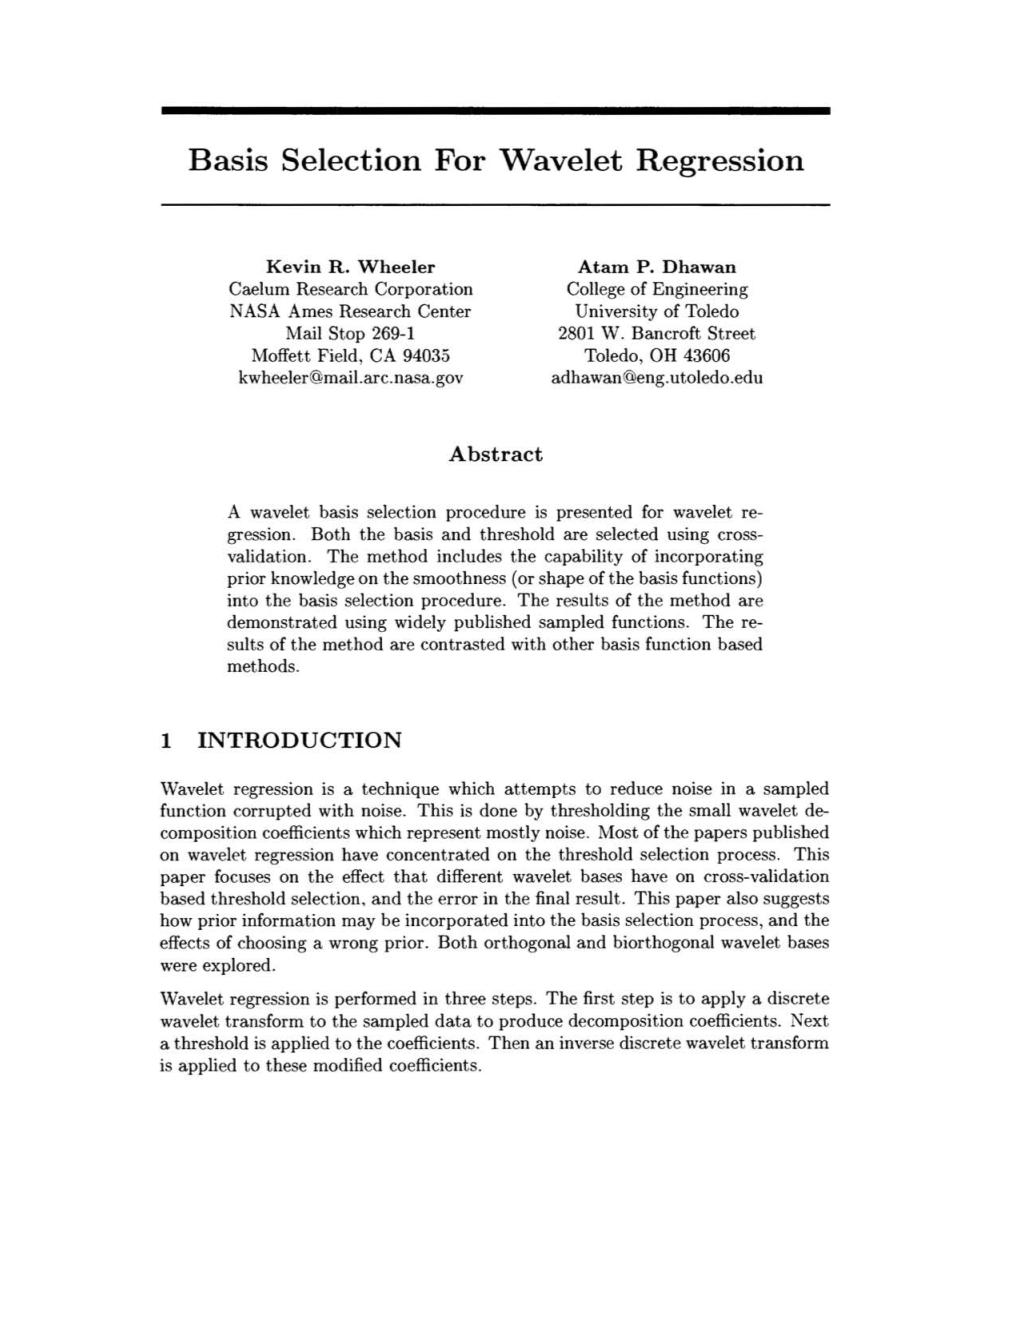 Basis Selection for Wavelet Regression